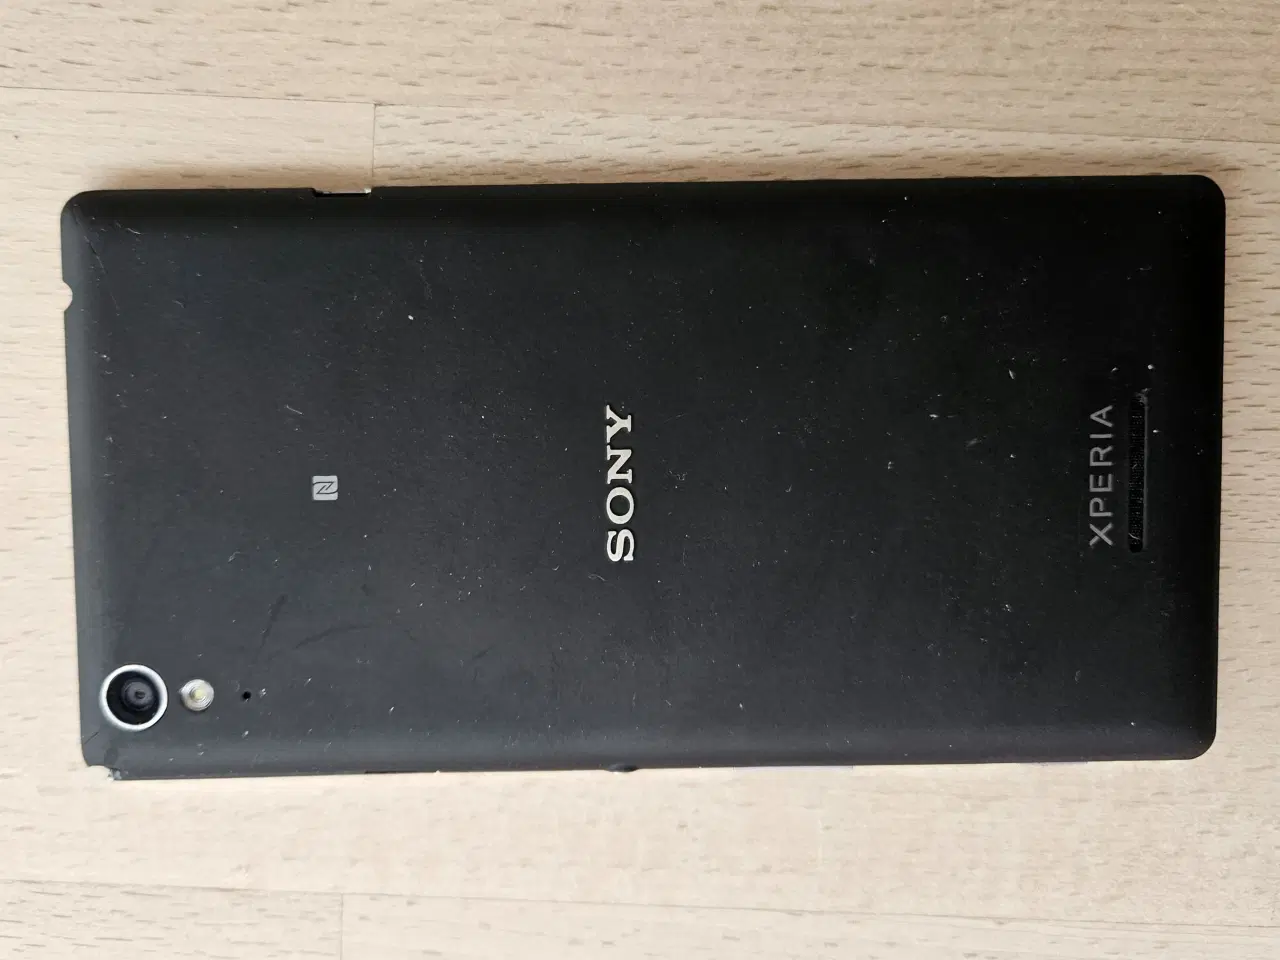 Billede 3 - Sony Xperia T3 smartphone